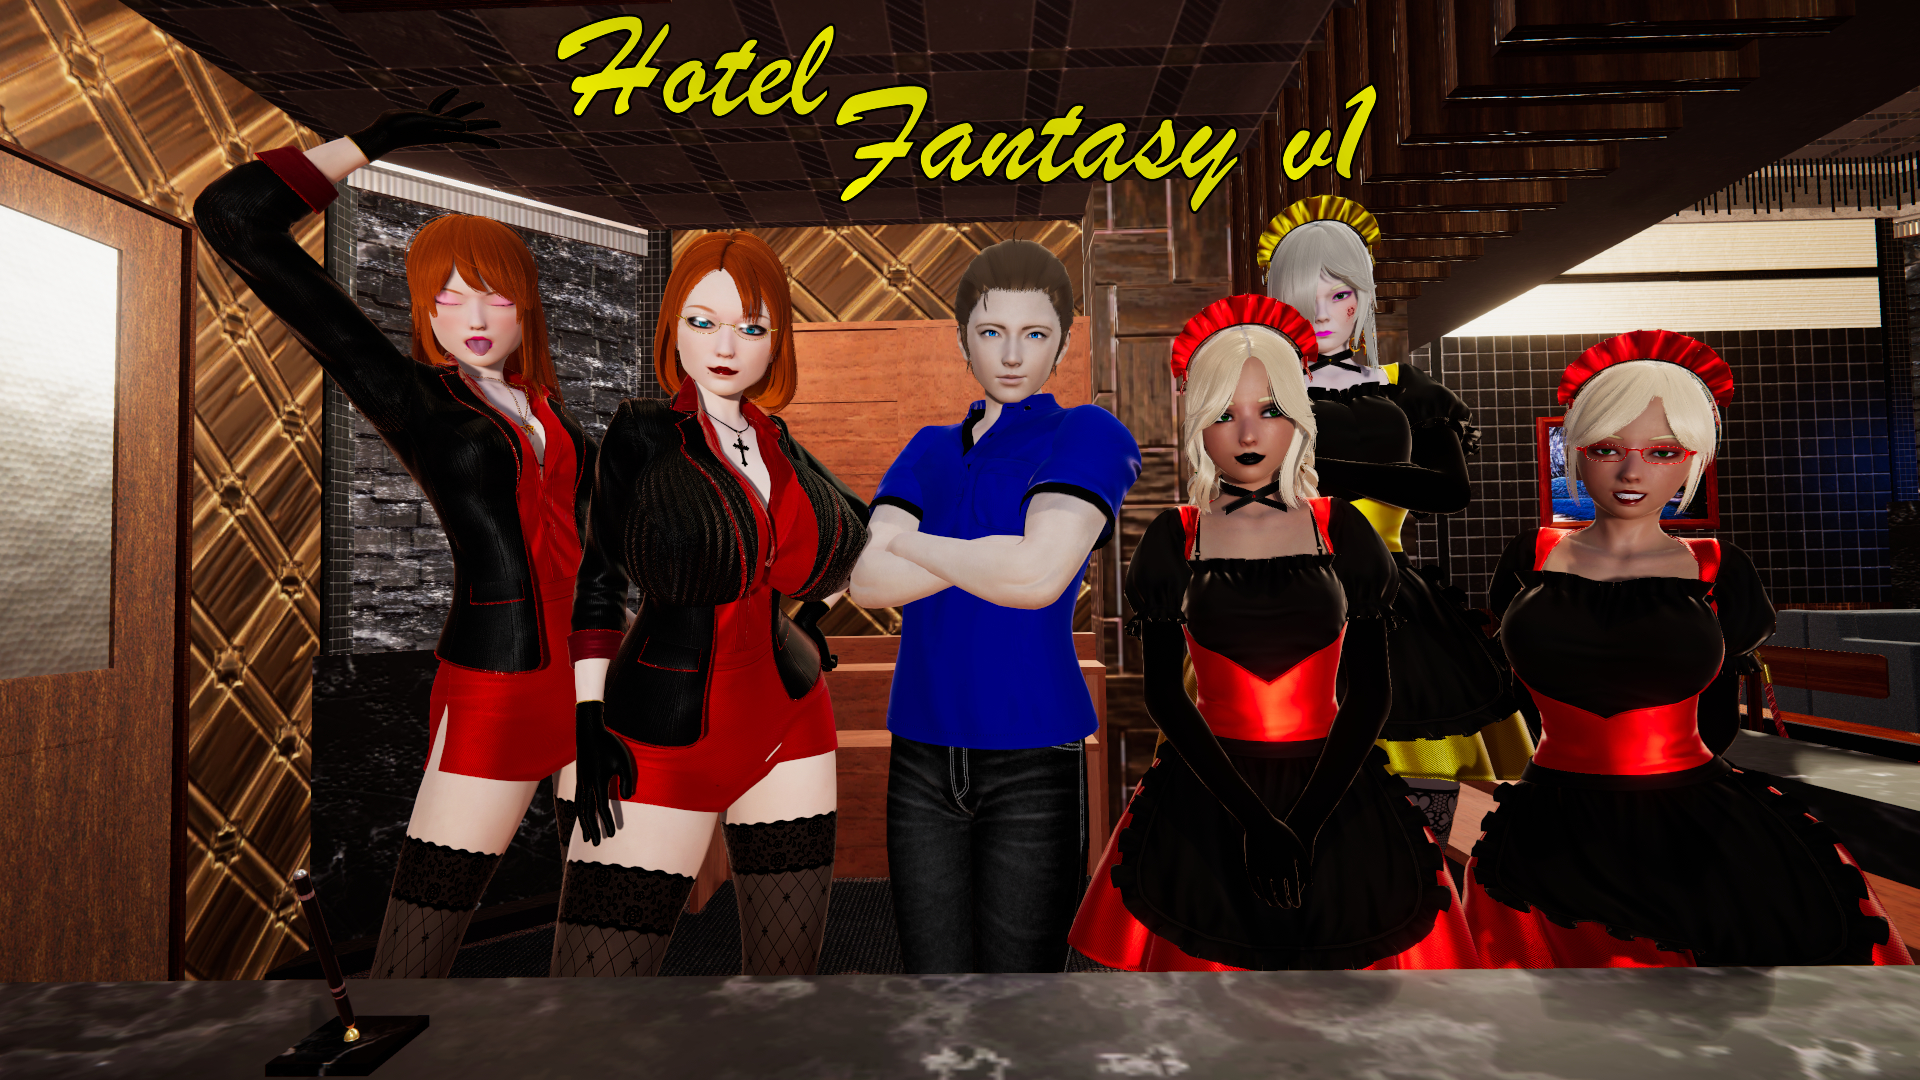 Hotel Fantasy [v1] main image